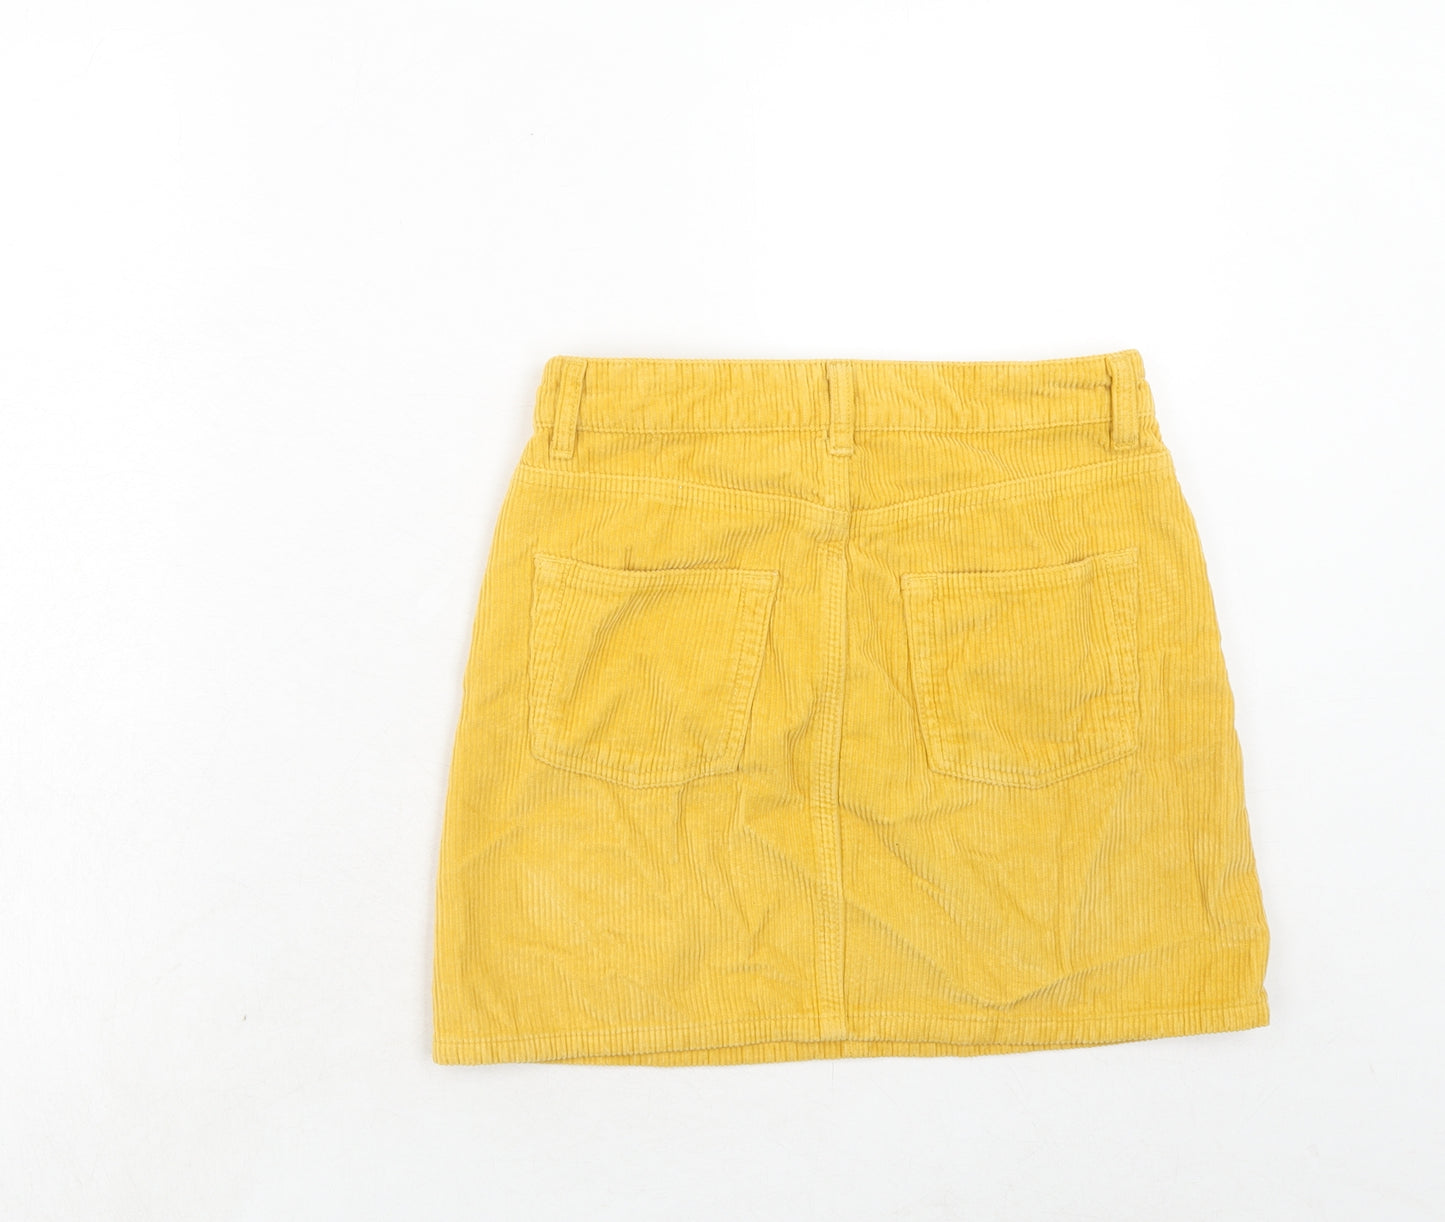 Topshop Womens Yellow Cotton Mini Skirt Size 8 Regular Zip